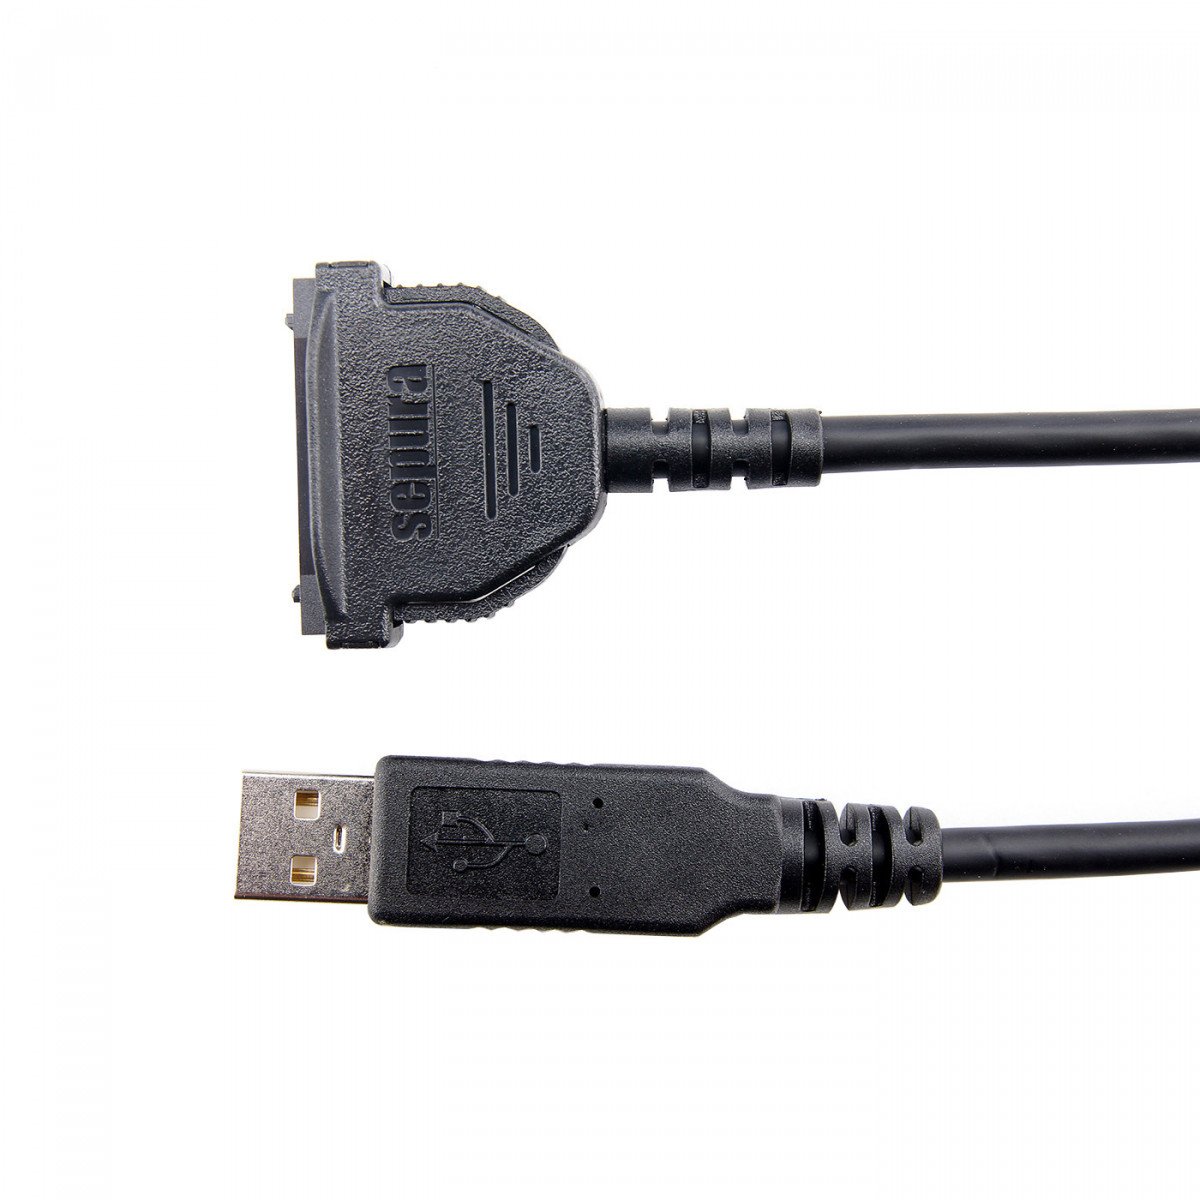 SEPURA USB programming/data cable V2, for STP8/9000, length approx. 1.8m 300-00972